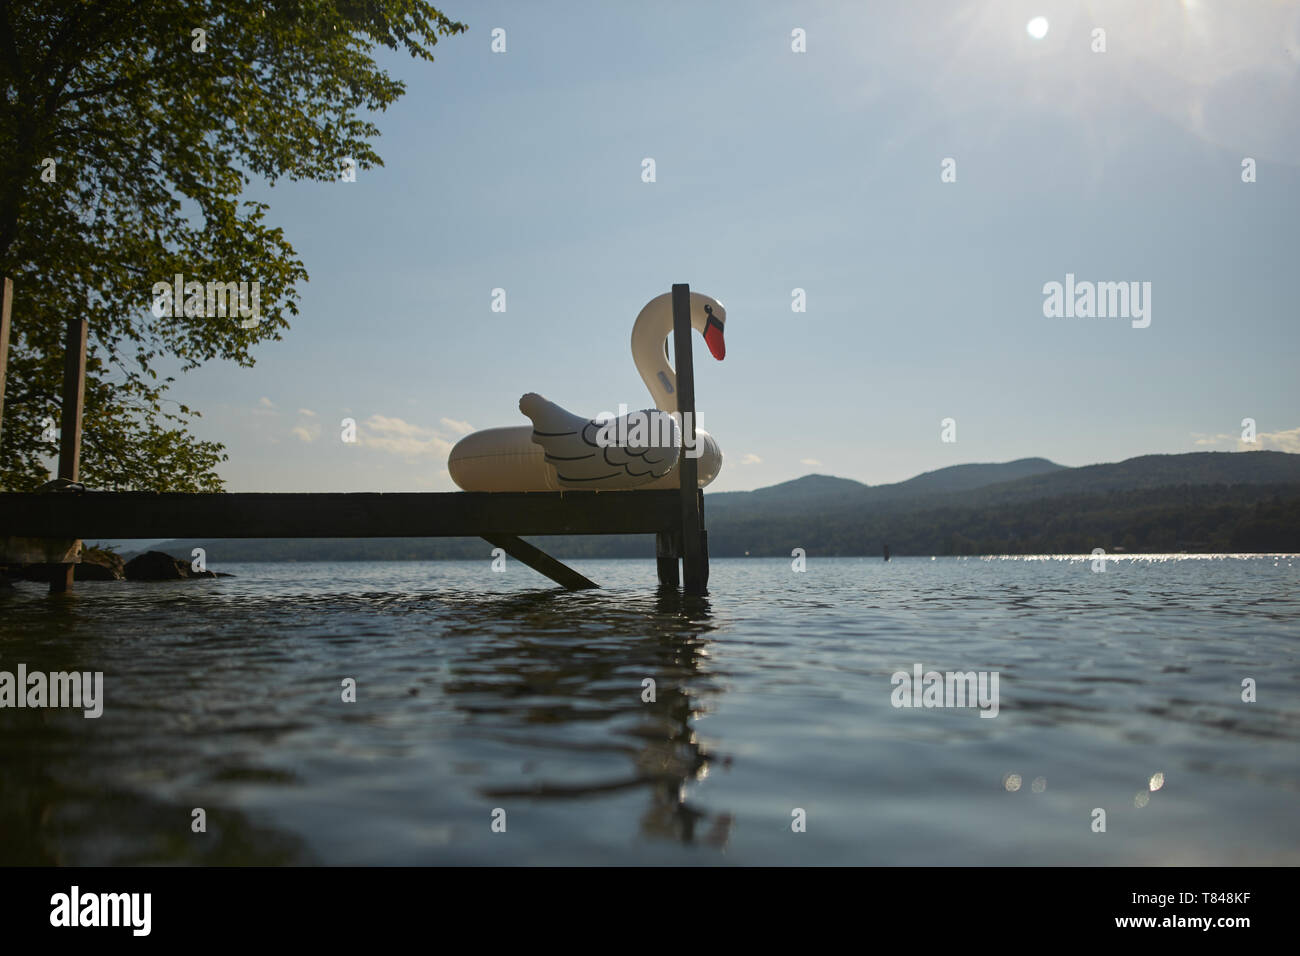 Inflatable swan on dock Stock Photo